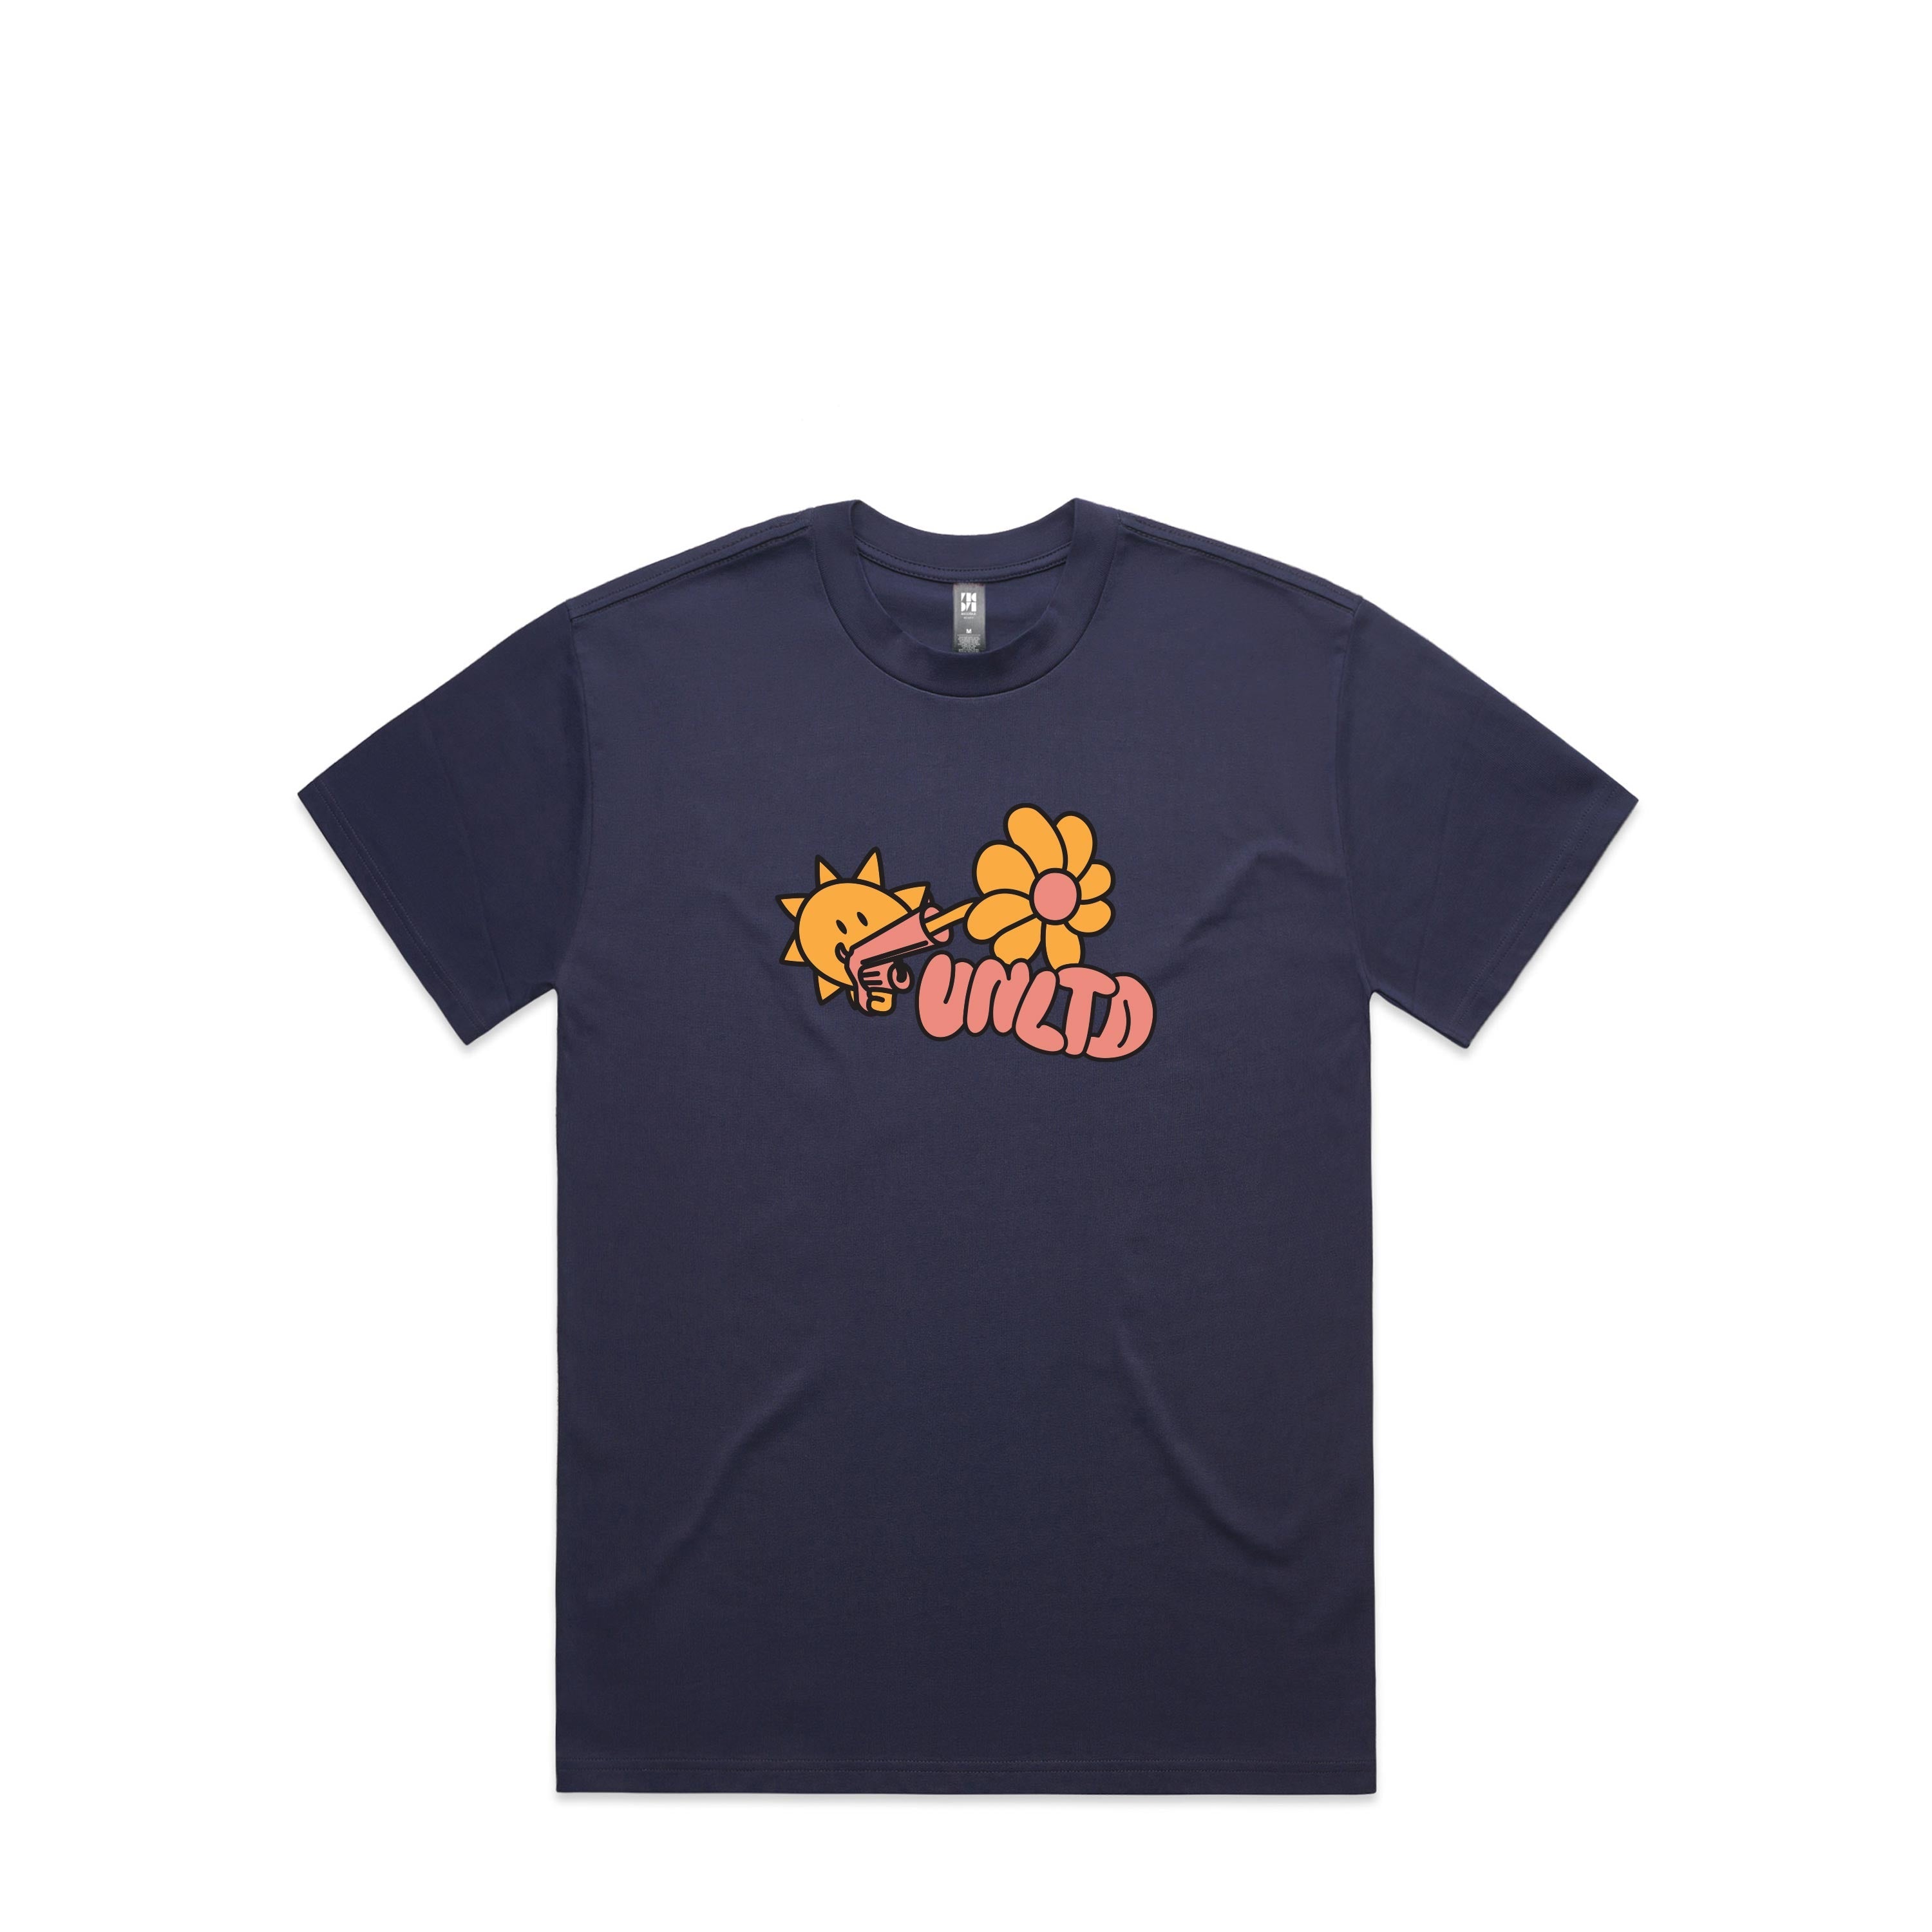 Bloom T-Shirt